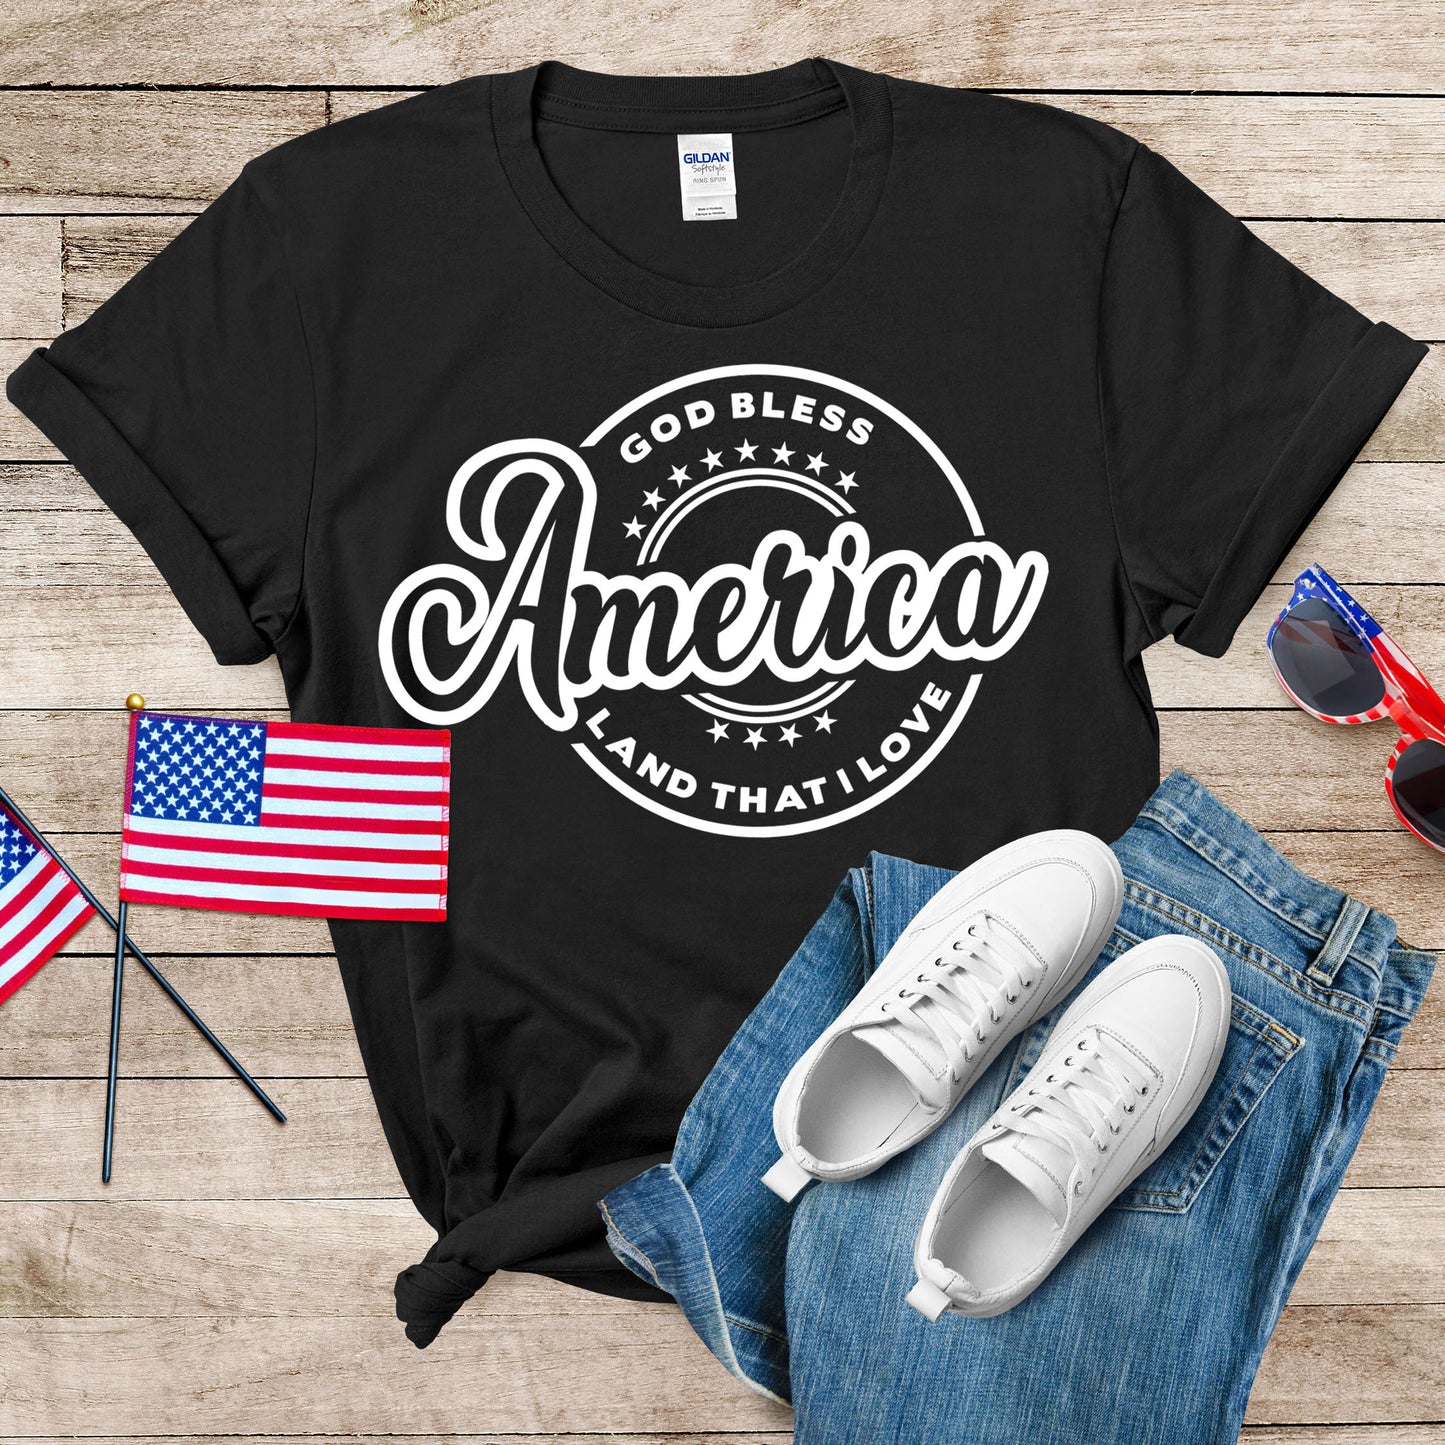 God Bless America- Land that I Love T-Shirt